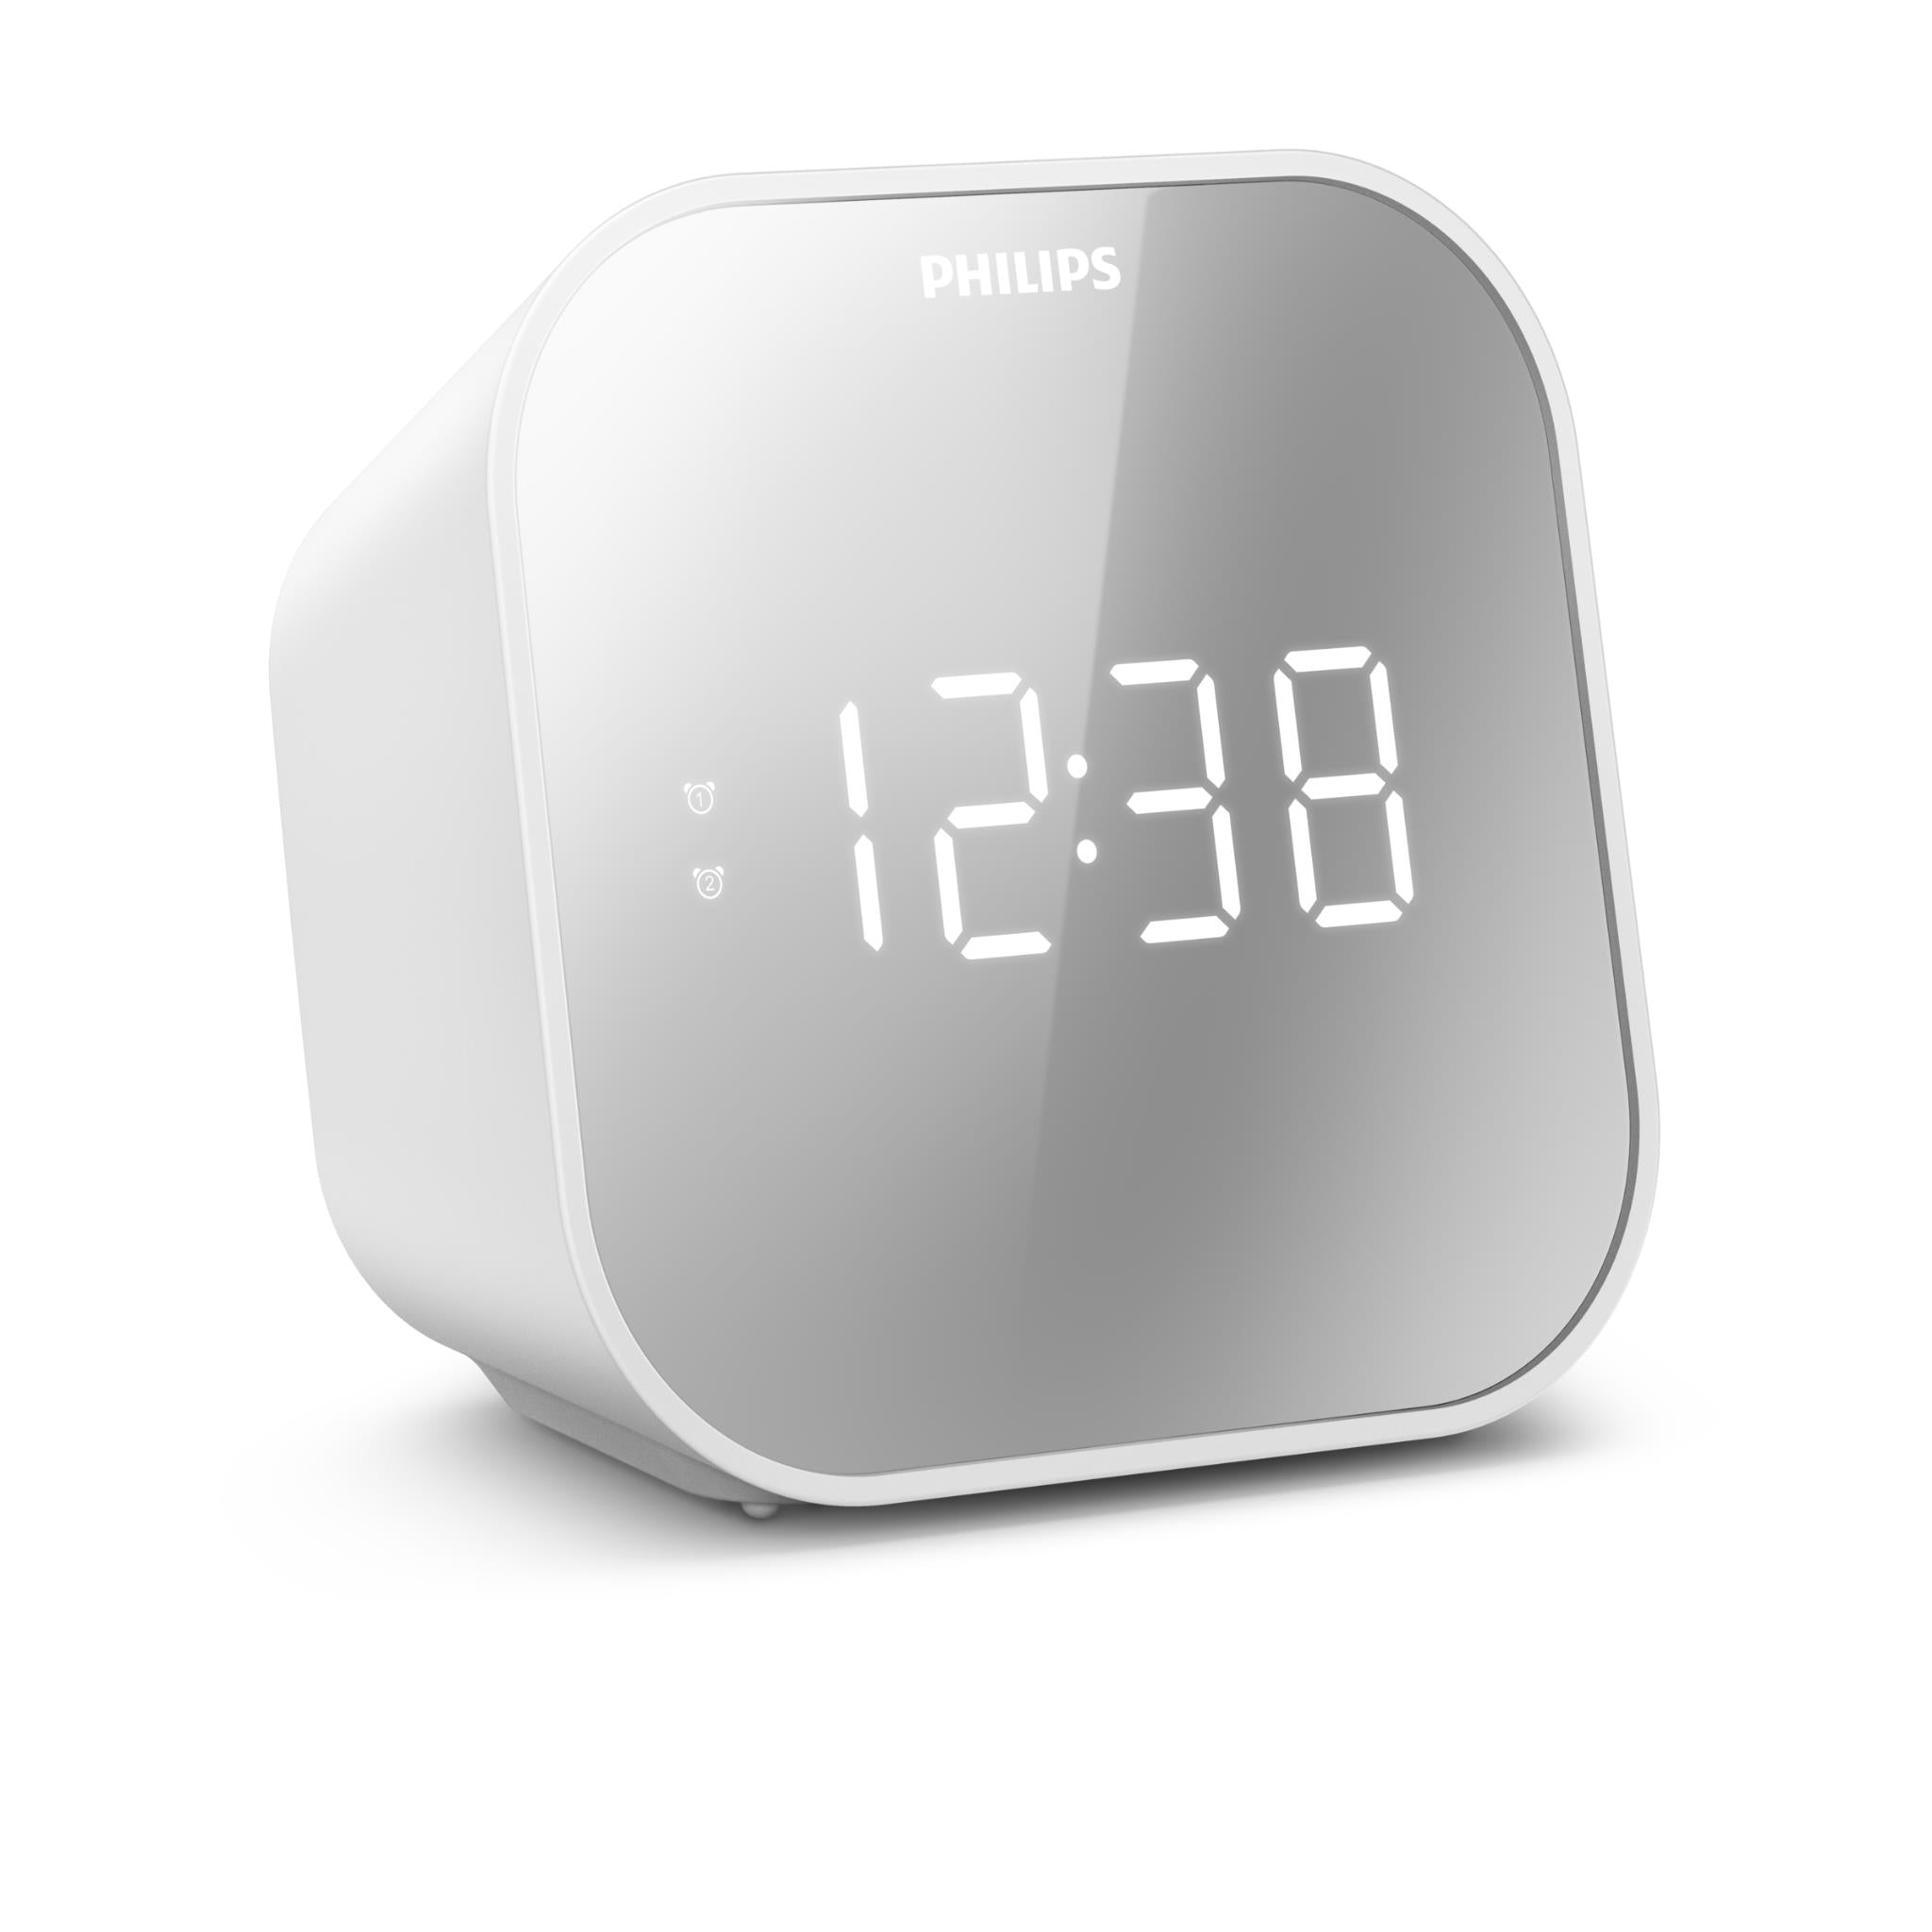 philips alarm clock with usb charging